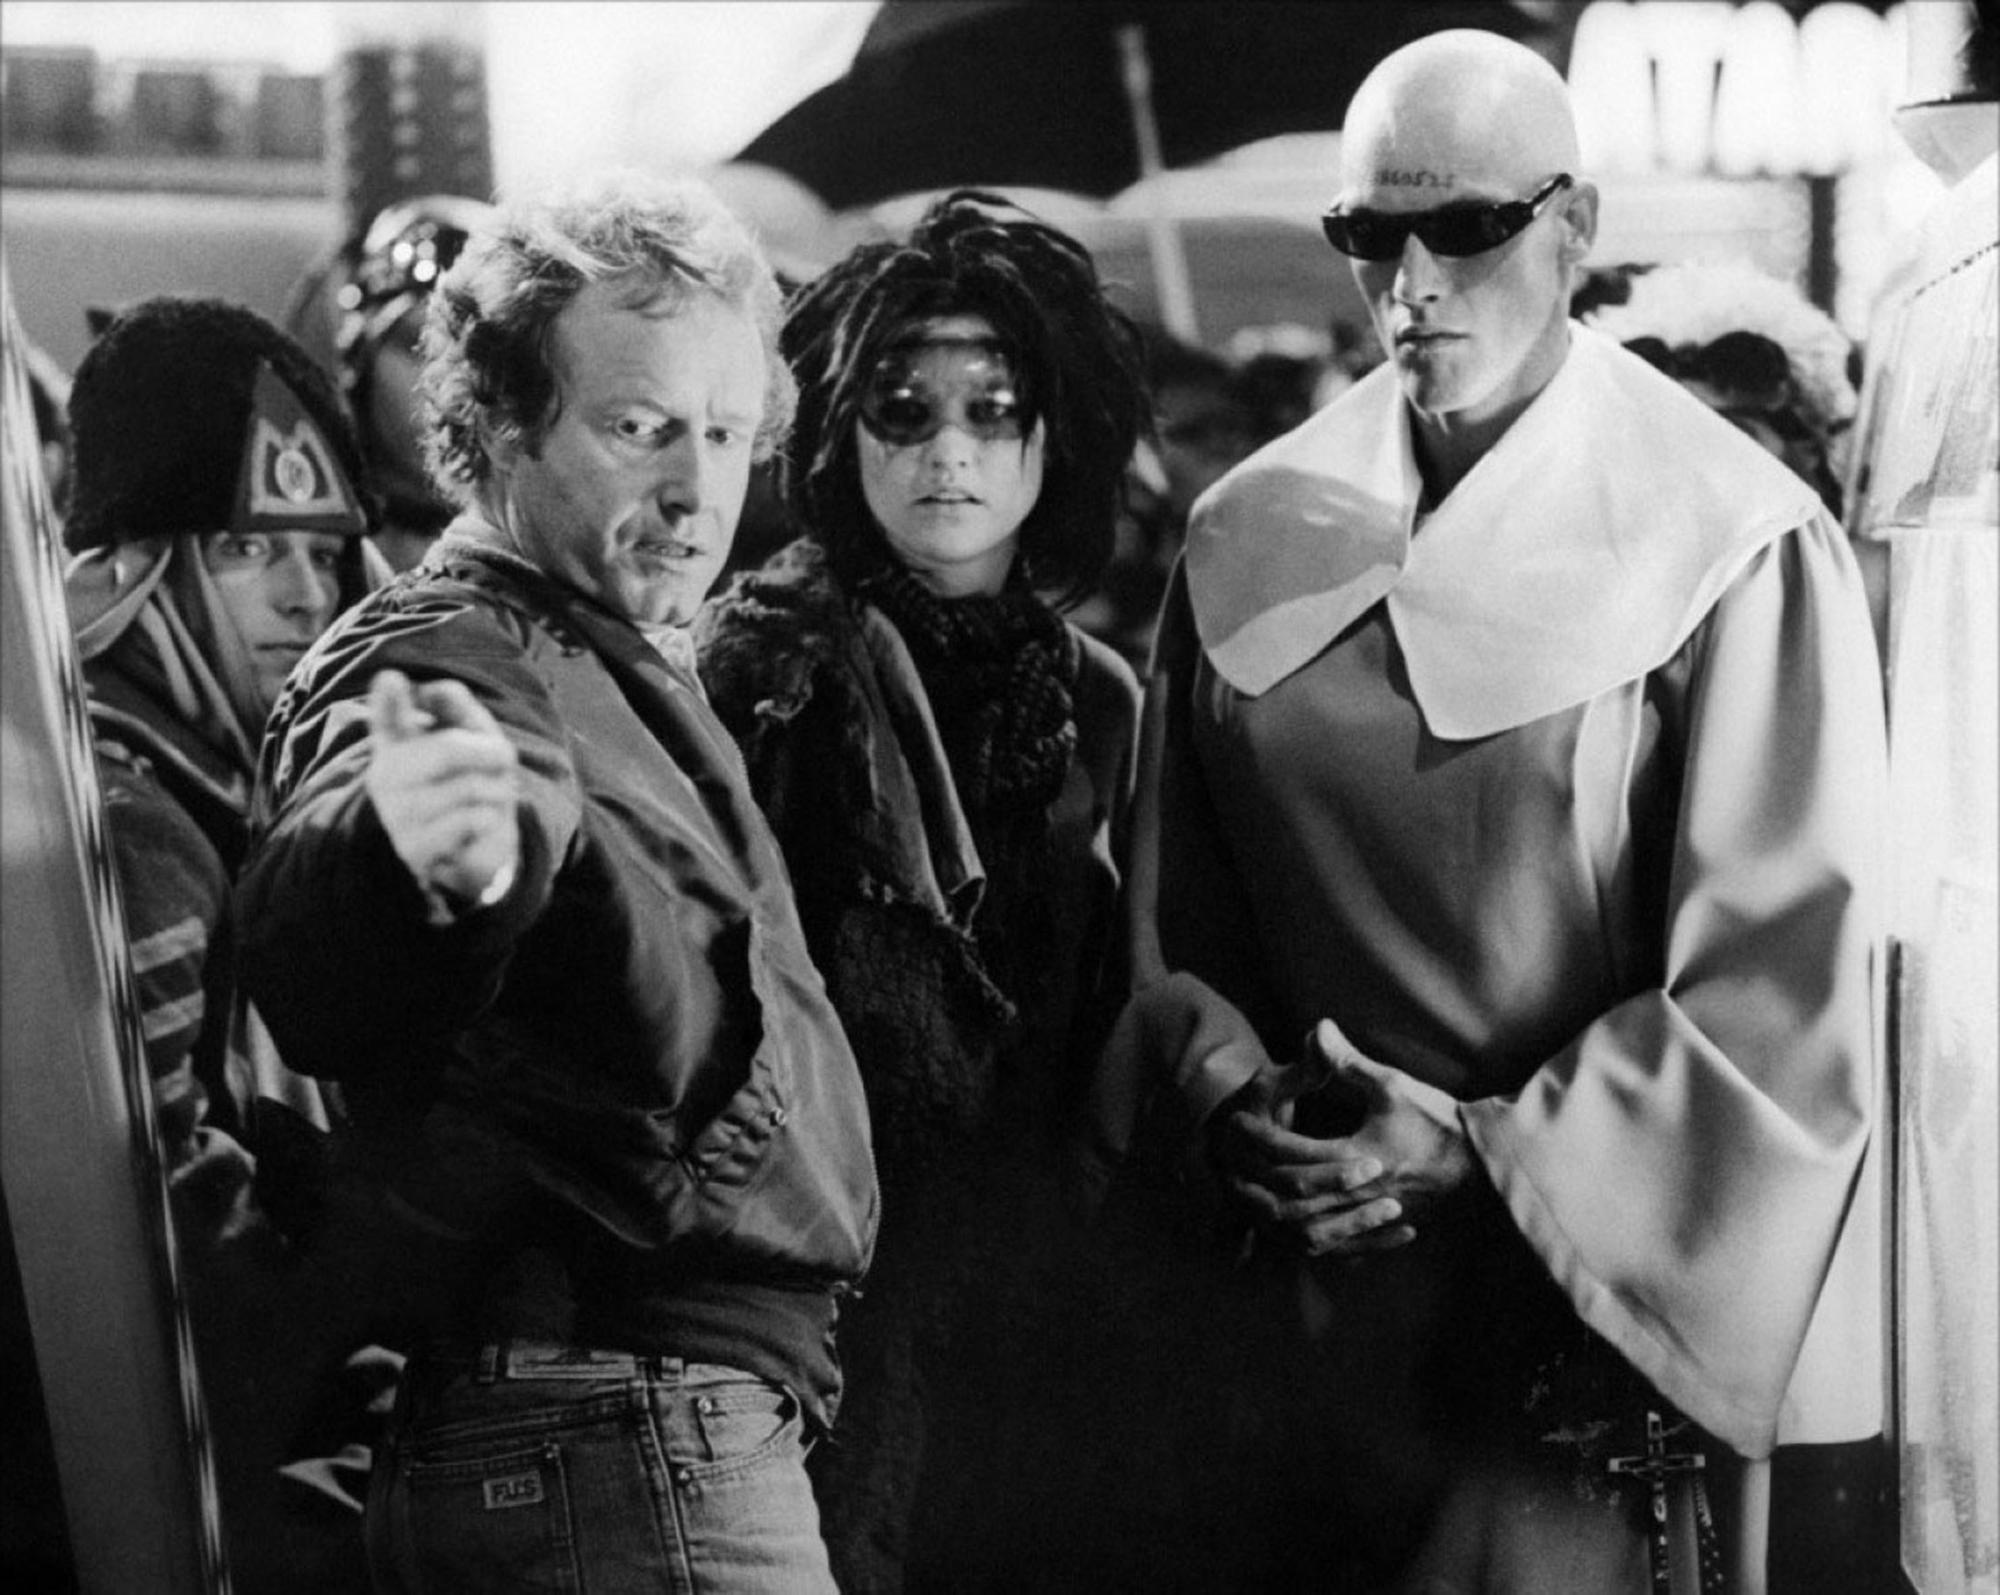 Ridley Scott dirige le tournage de "Blade Runner" en 1982. [AFP - The Ladd Company]